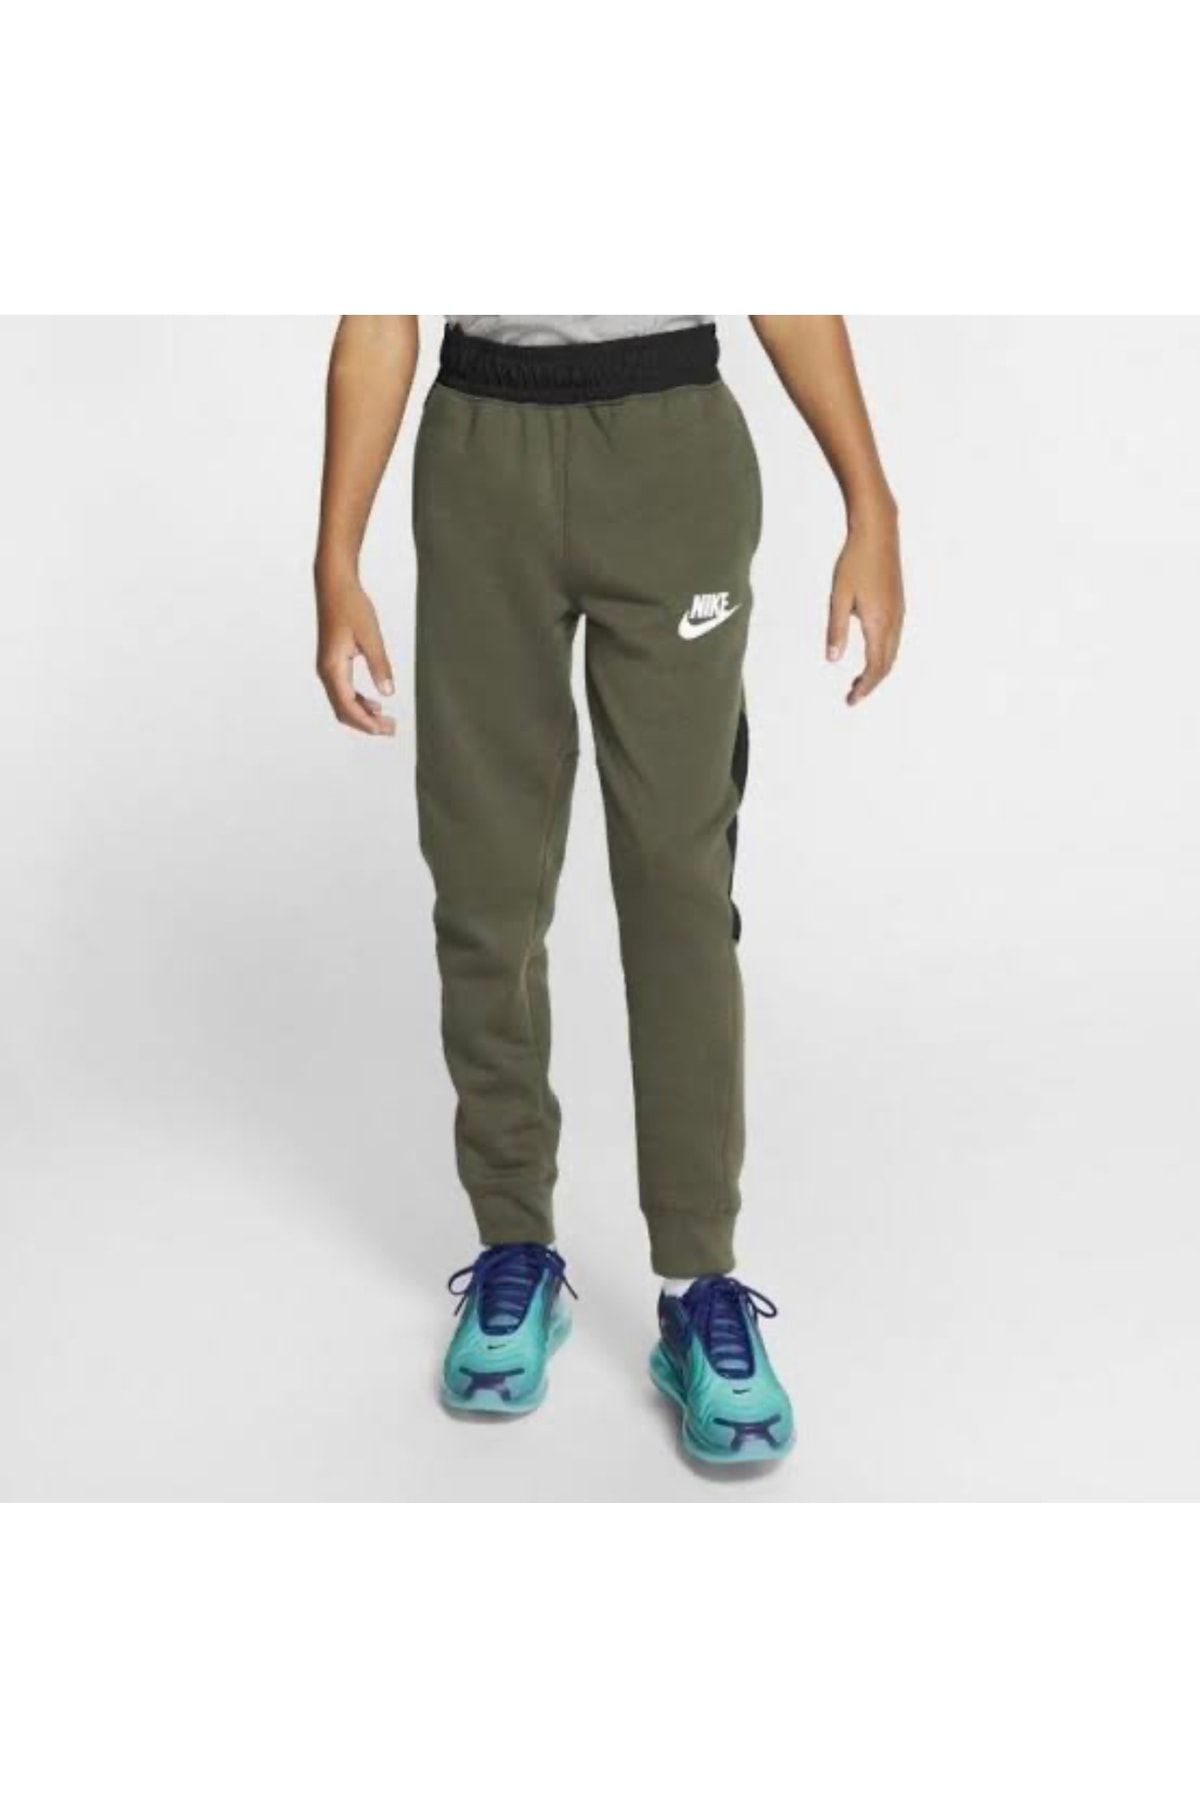 Nike Kids Hybrid Fleece Pantolon